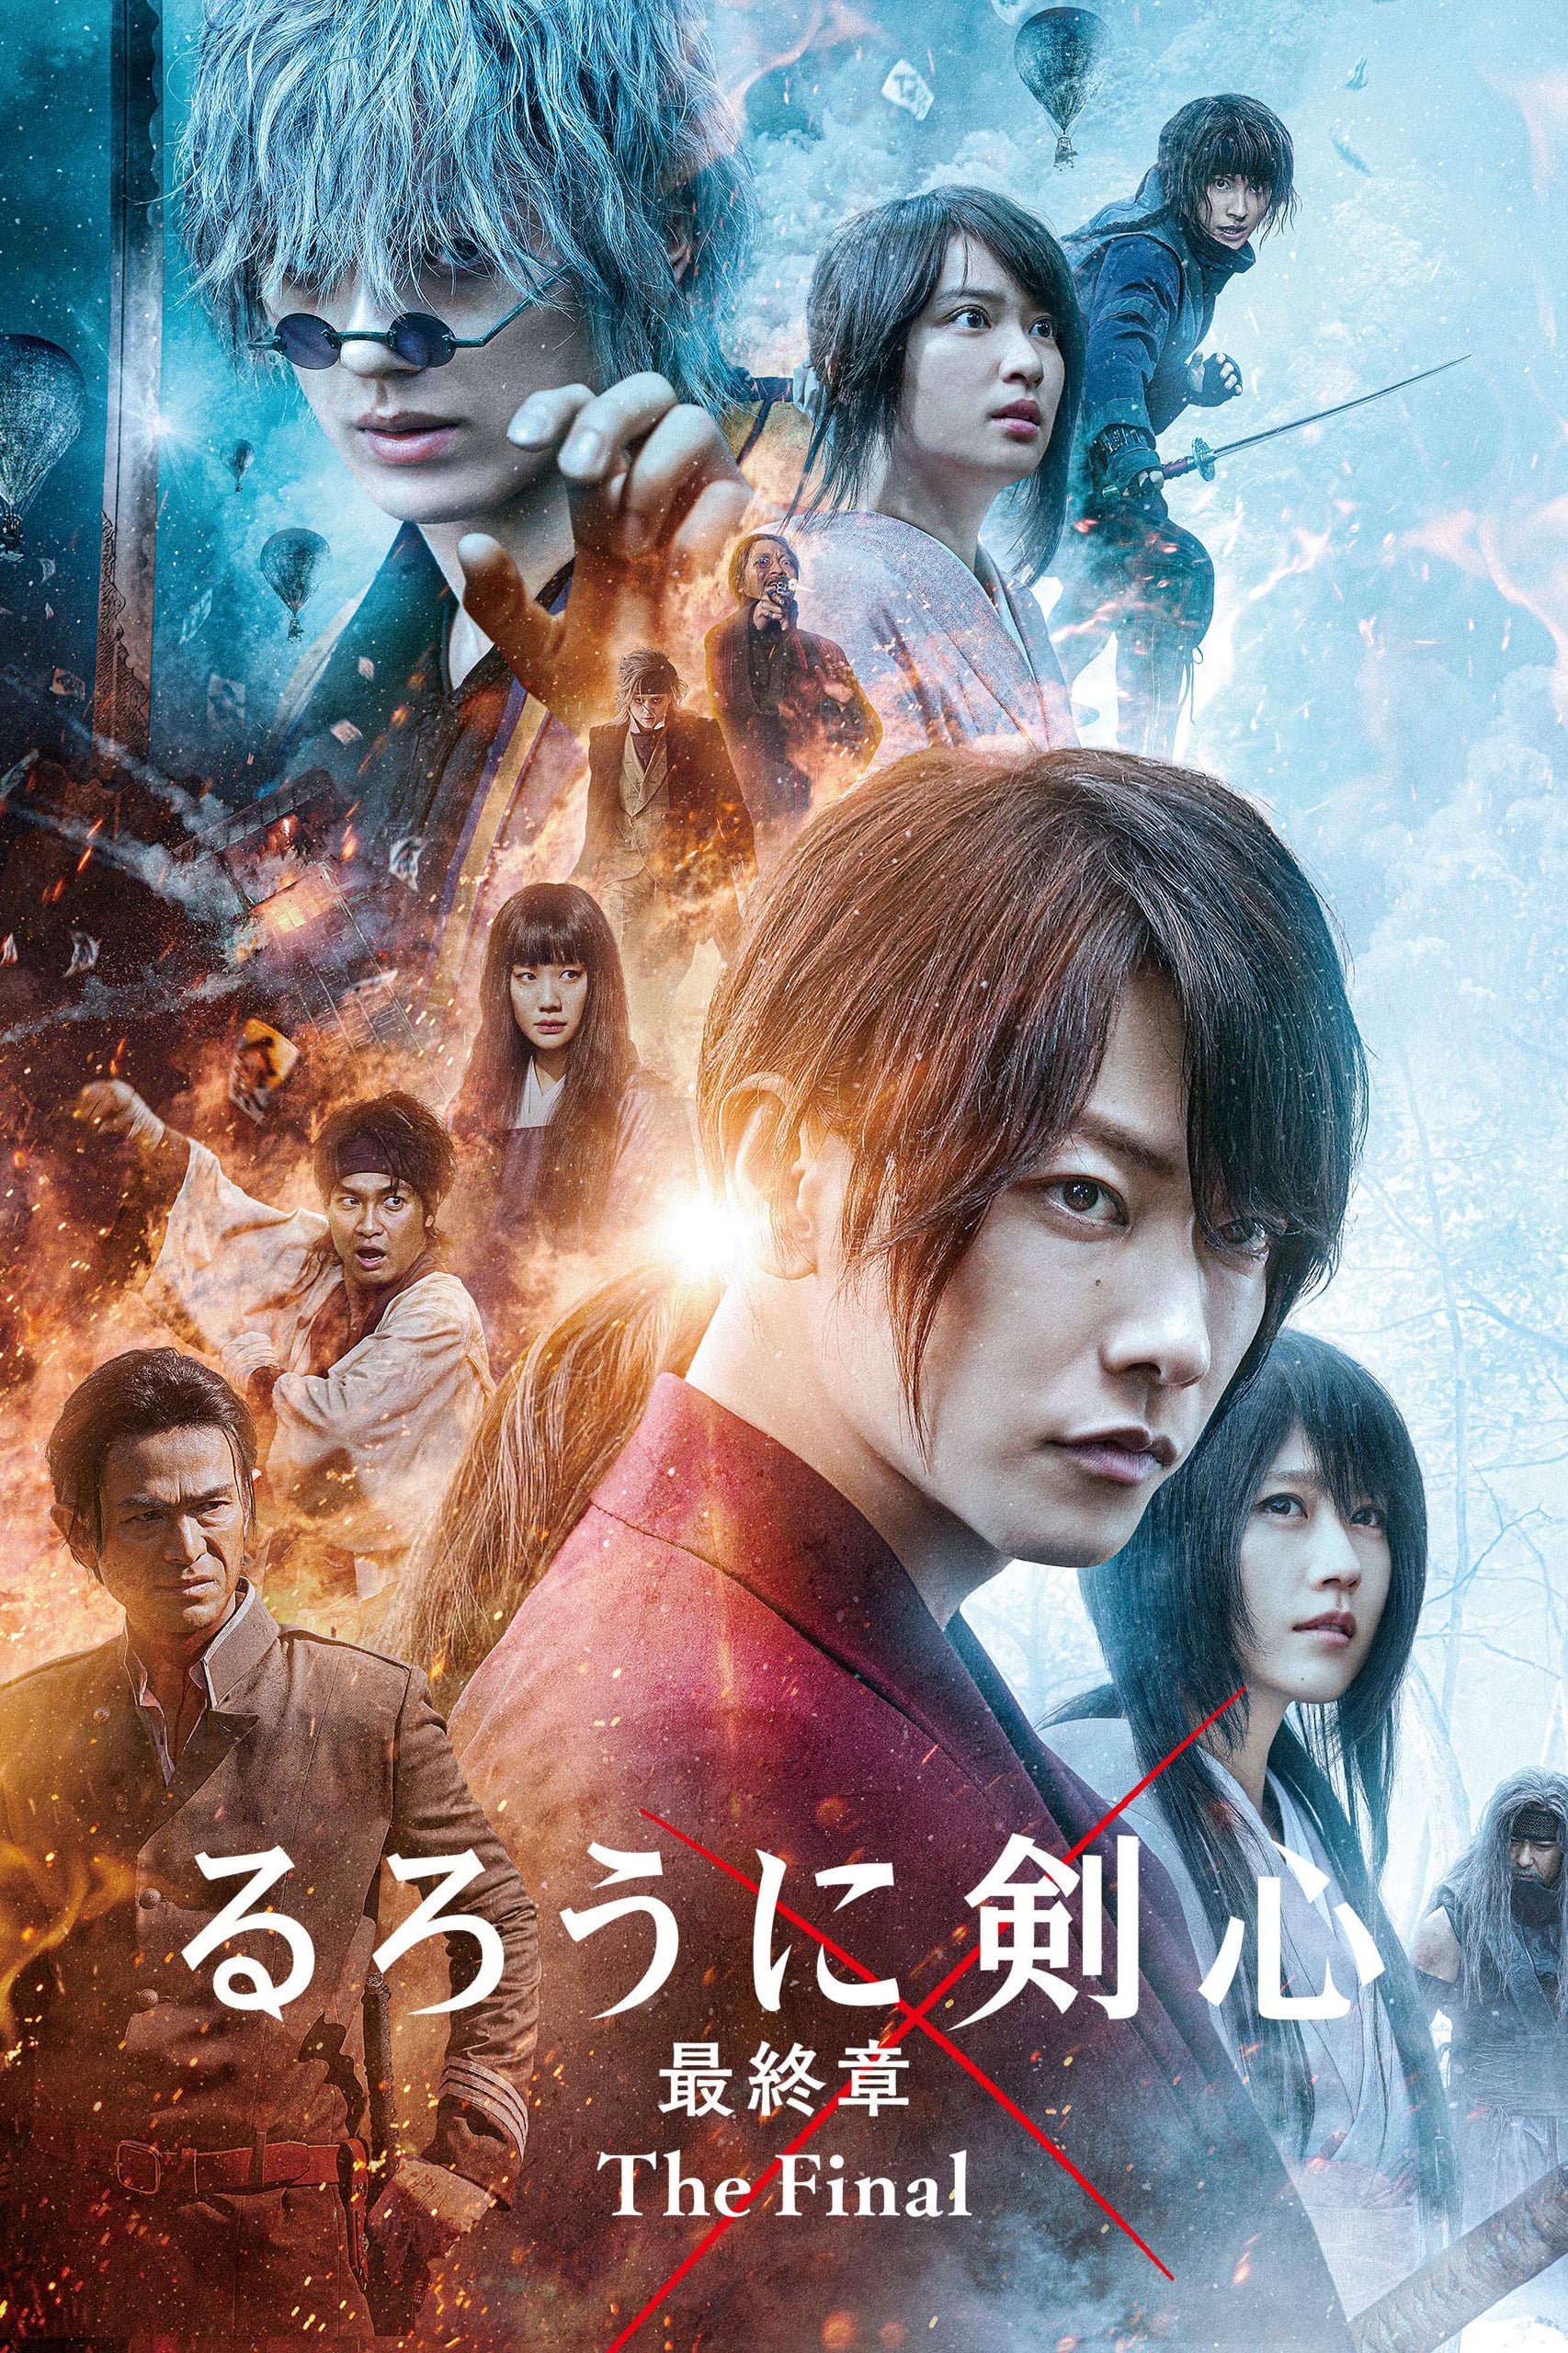 Rurouni Kenshin The Final (2021) - newmovies-hd.org